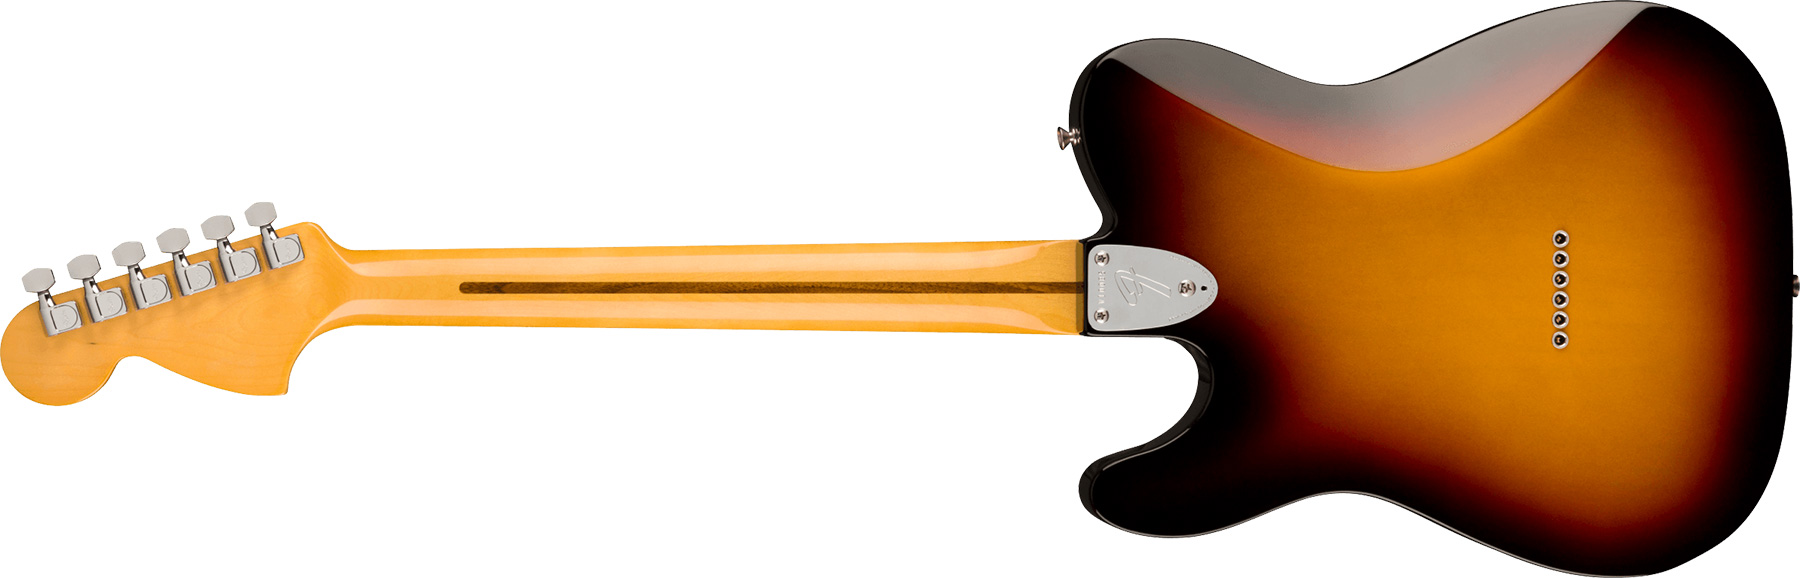 Fender Tele Deluxe 1975 American Vintage Ii Usa 2h Ht Mn - 3-color Sunburst - Guitarra eléctrica con forma de tel - Variation 1